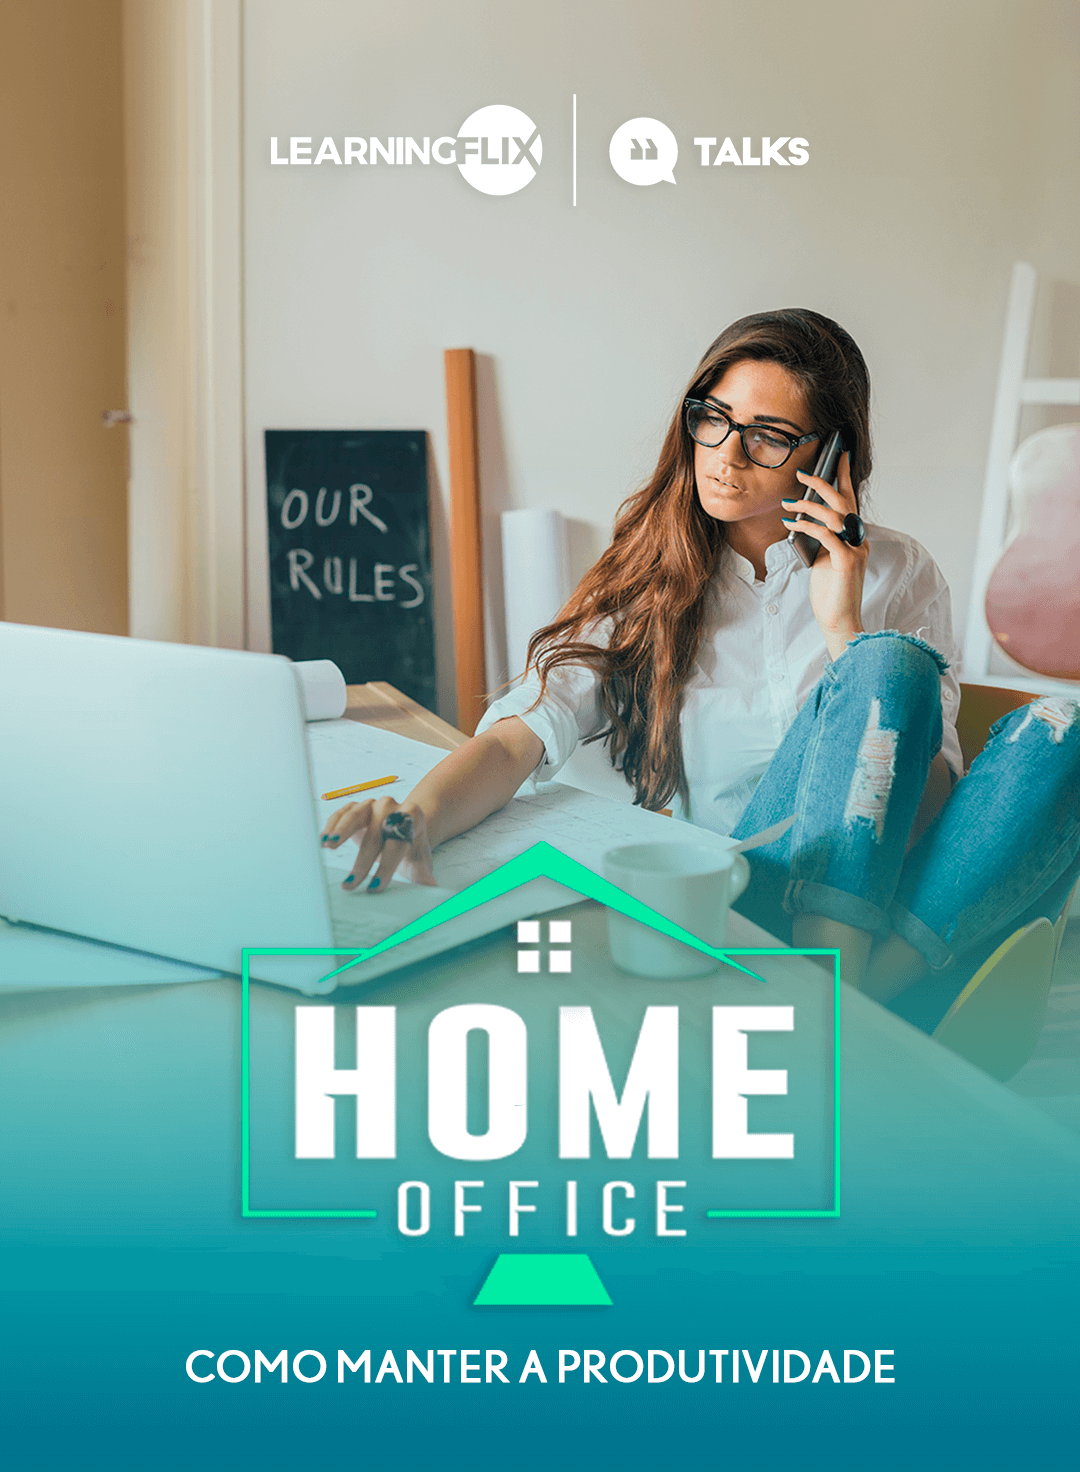 09. talks home office